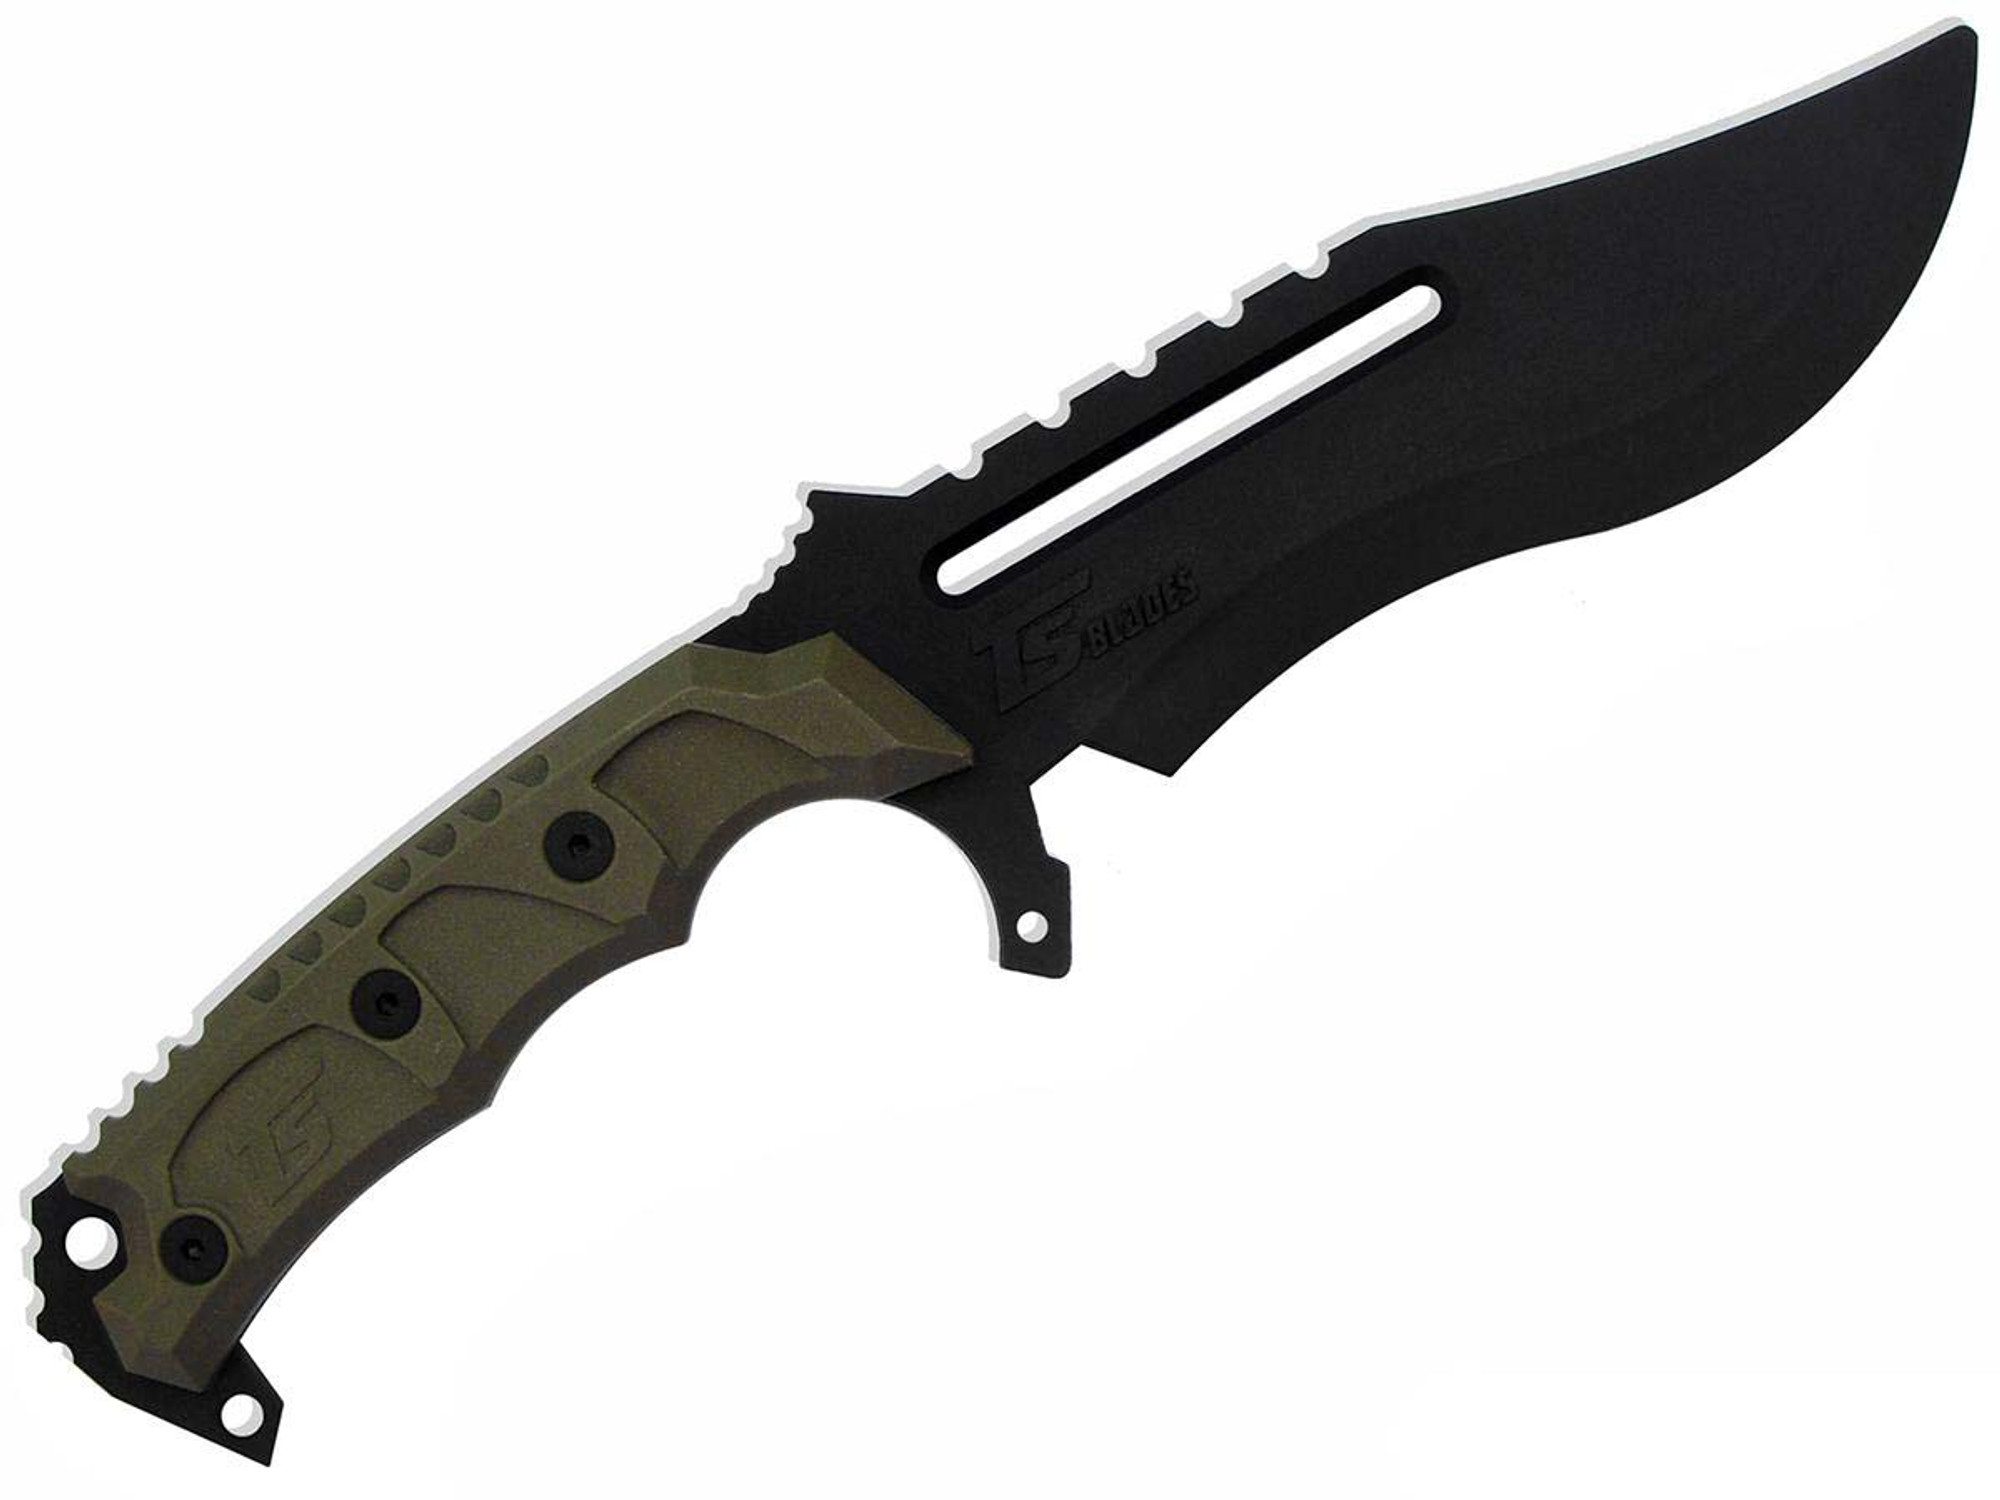 TS Blades TS-Raptor G3 Dummy PVC Knife for Training